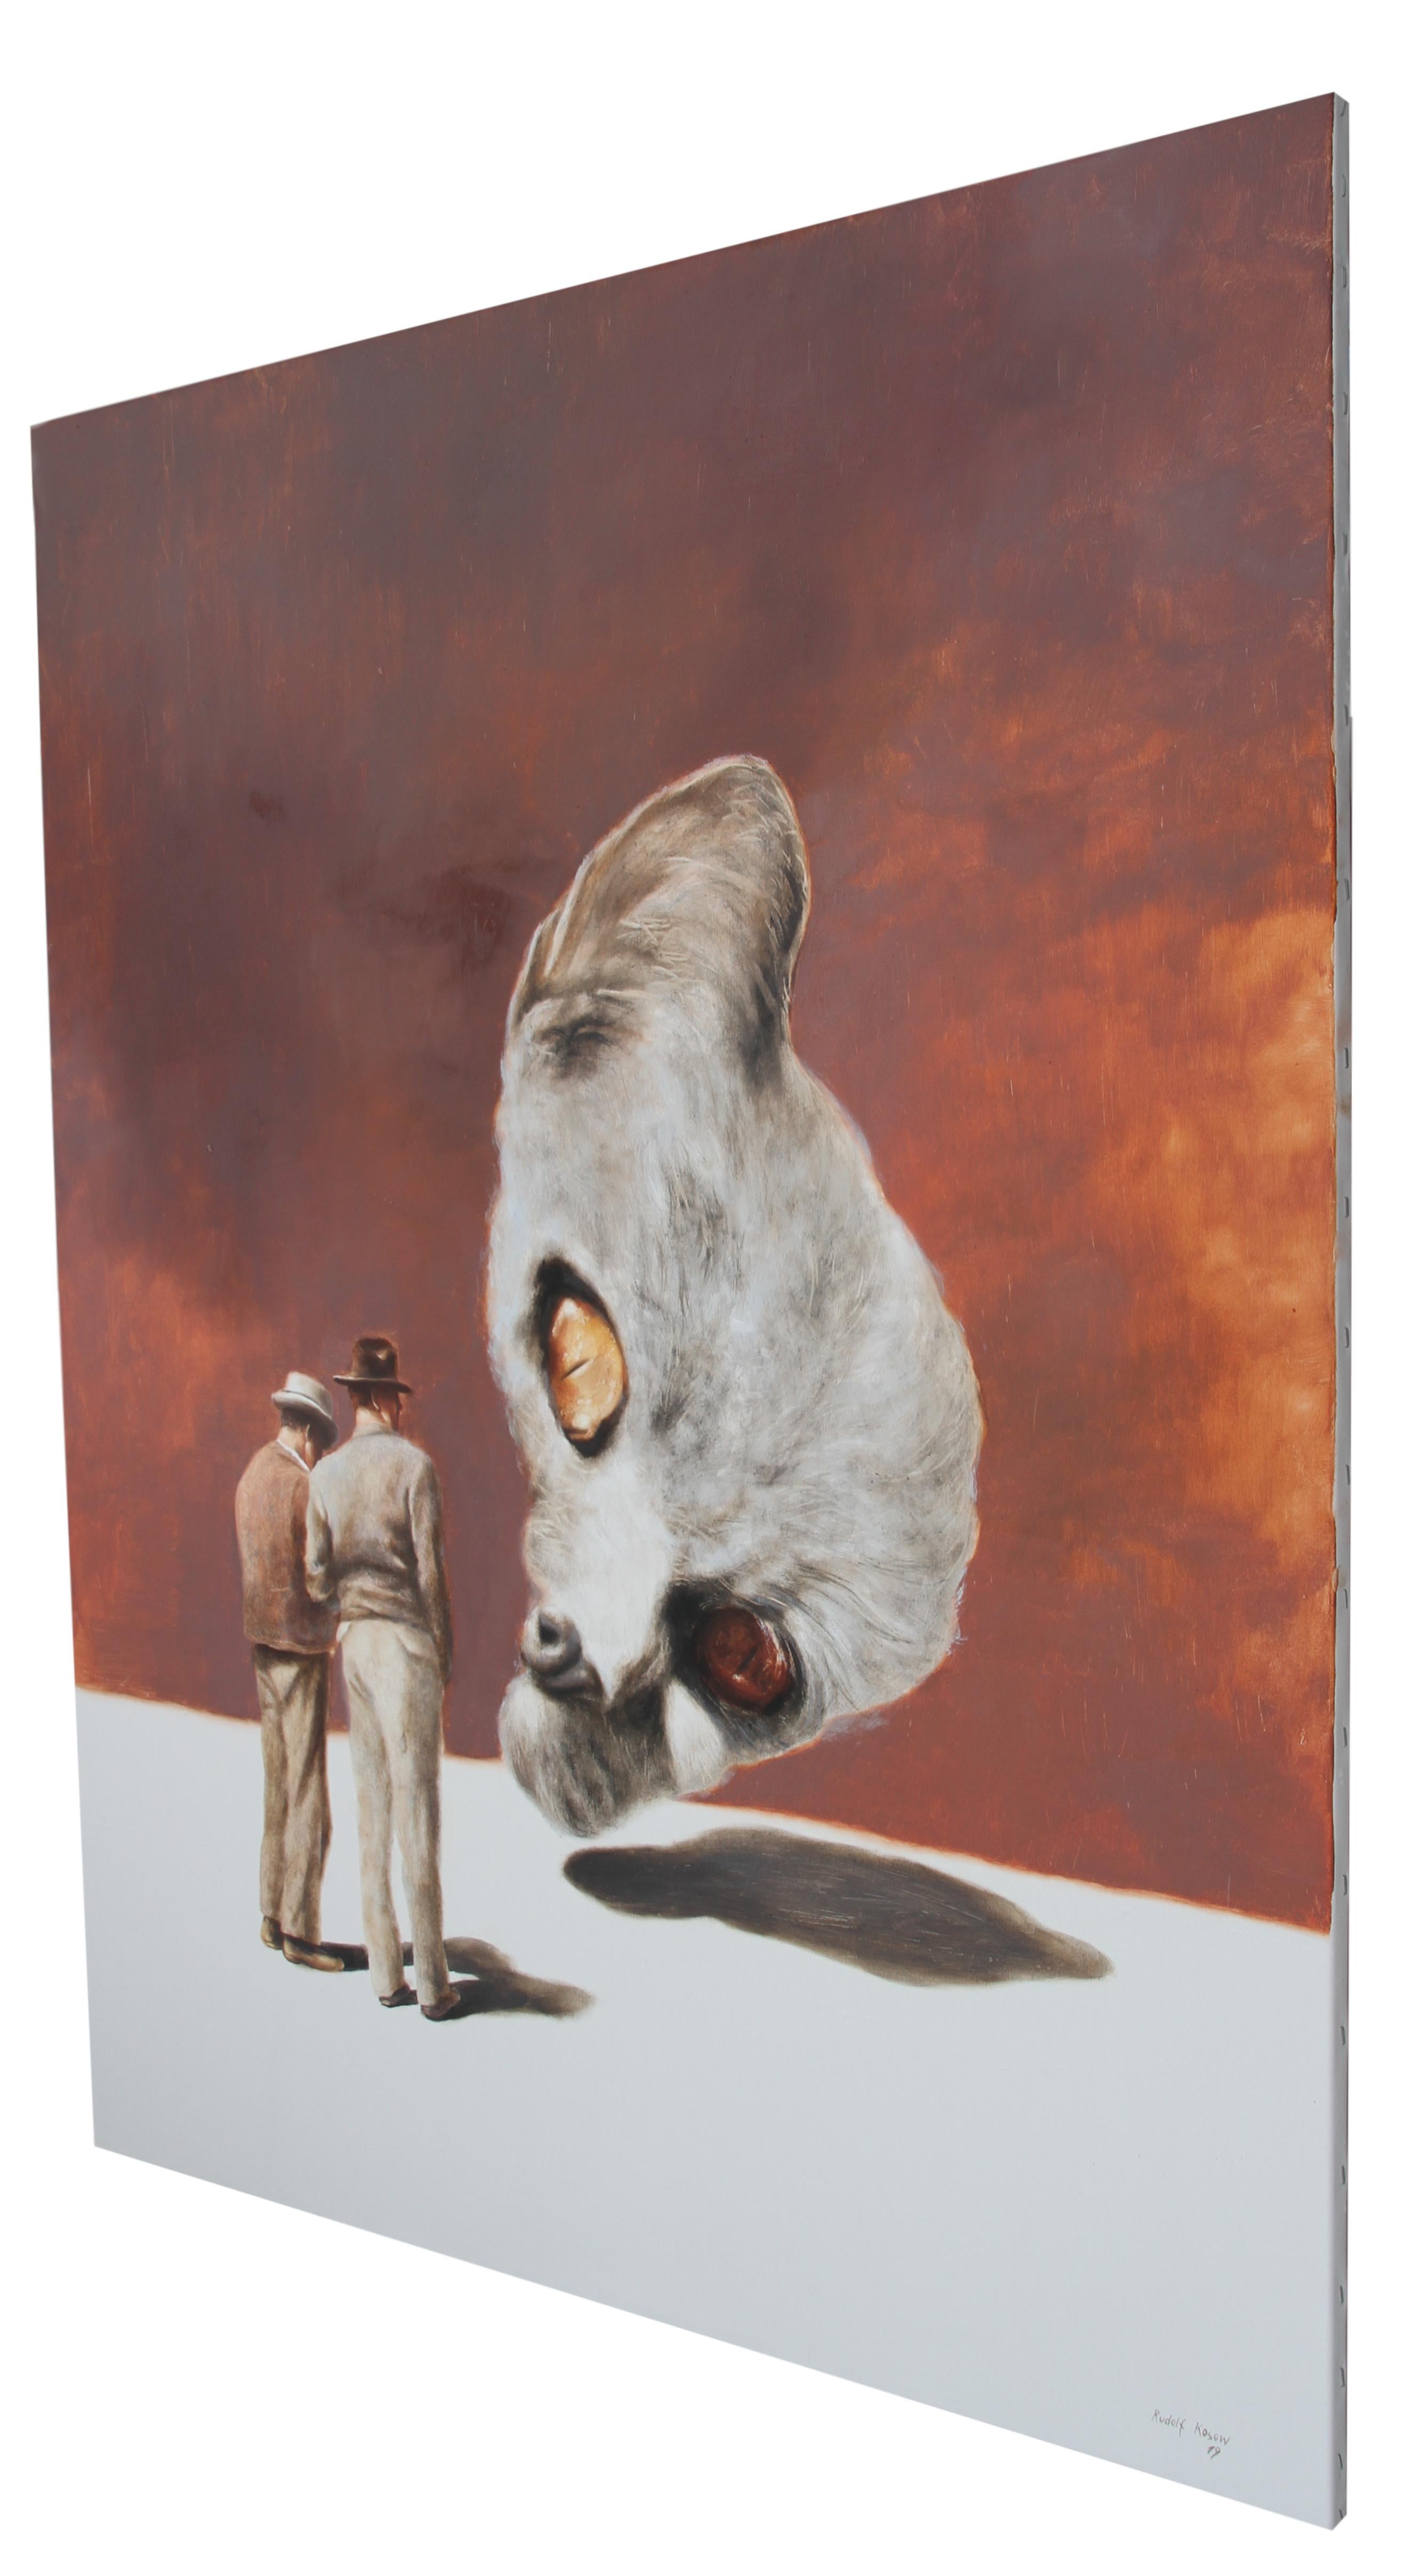 Phenomenon (cat eyes head mystery men vintage nostalgia figurative scene) - Painting by Rudolf Kosow